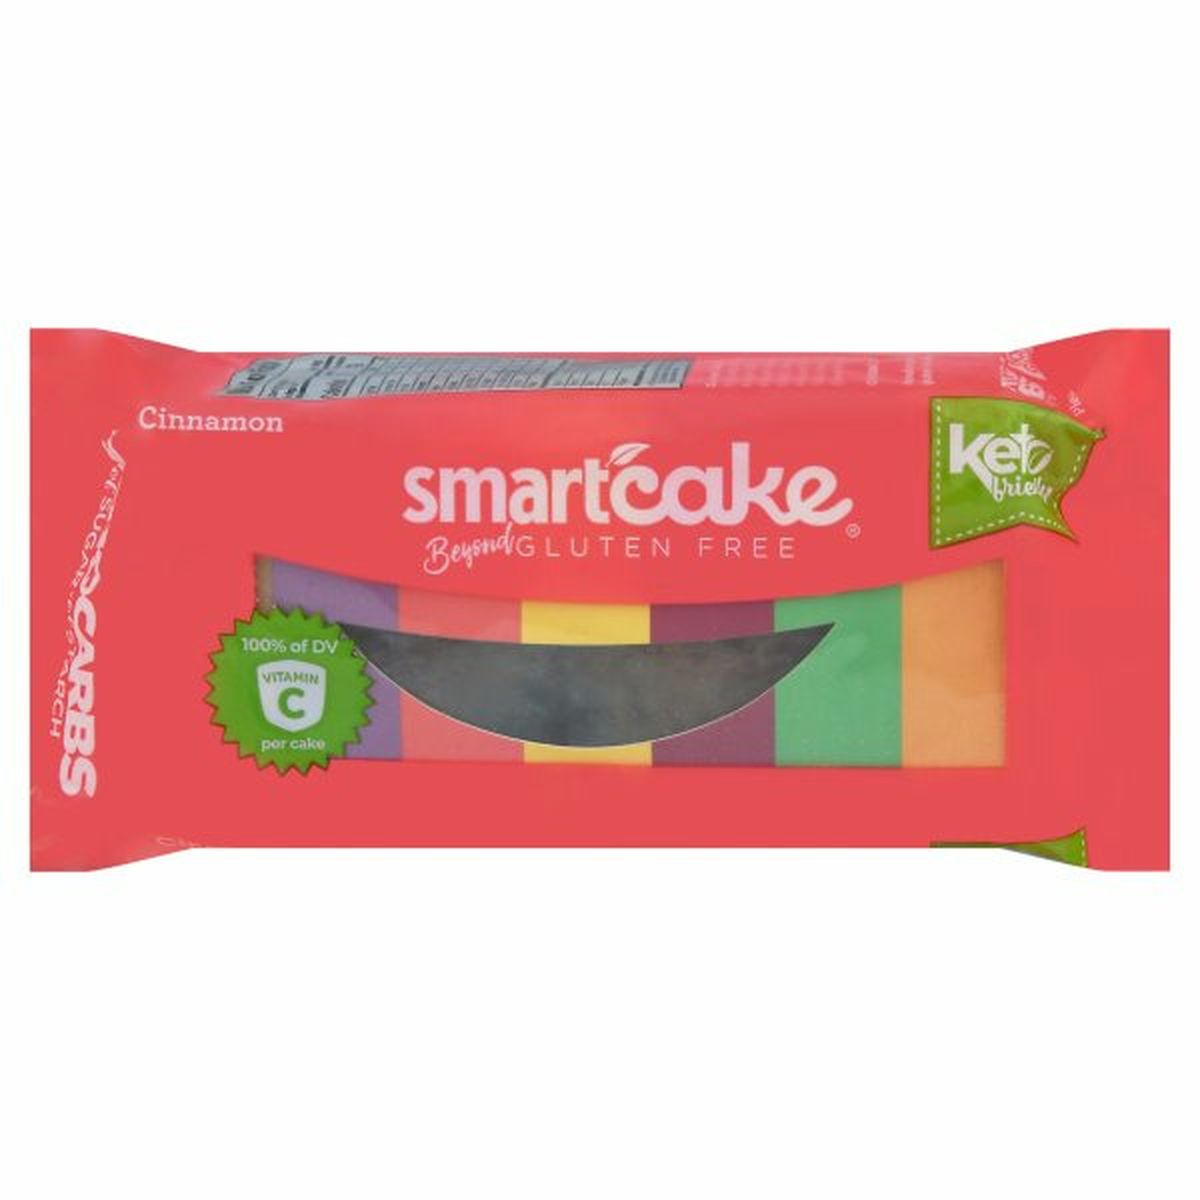 Calories in SmartCake Beyond Gluten Free Cake, Cinnamon